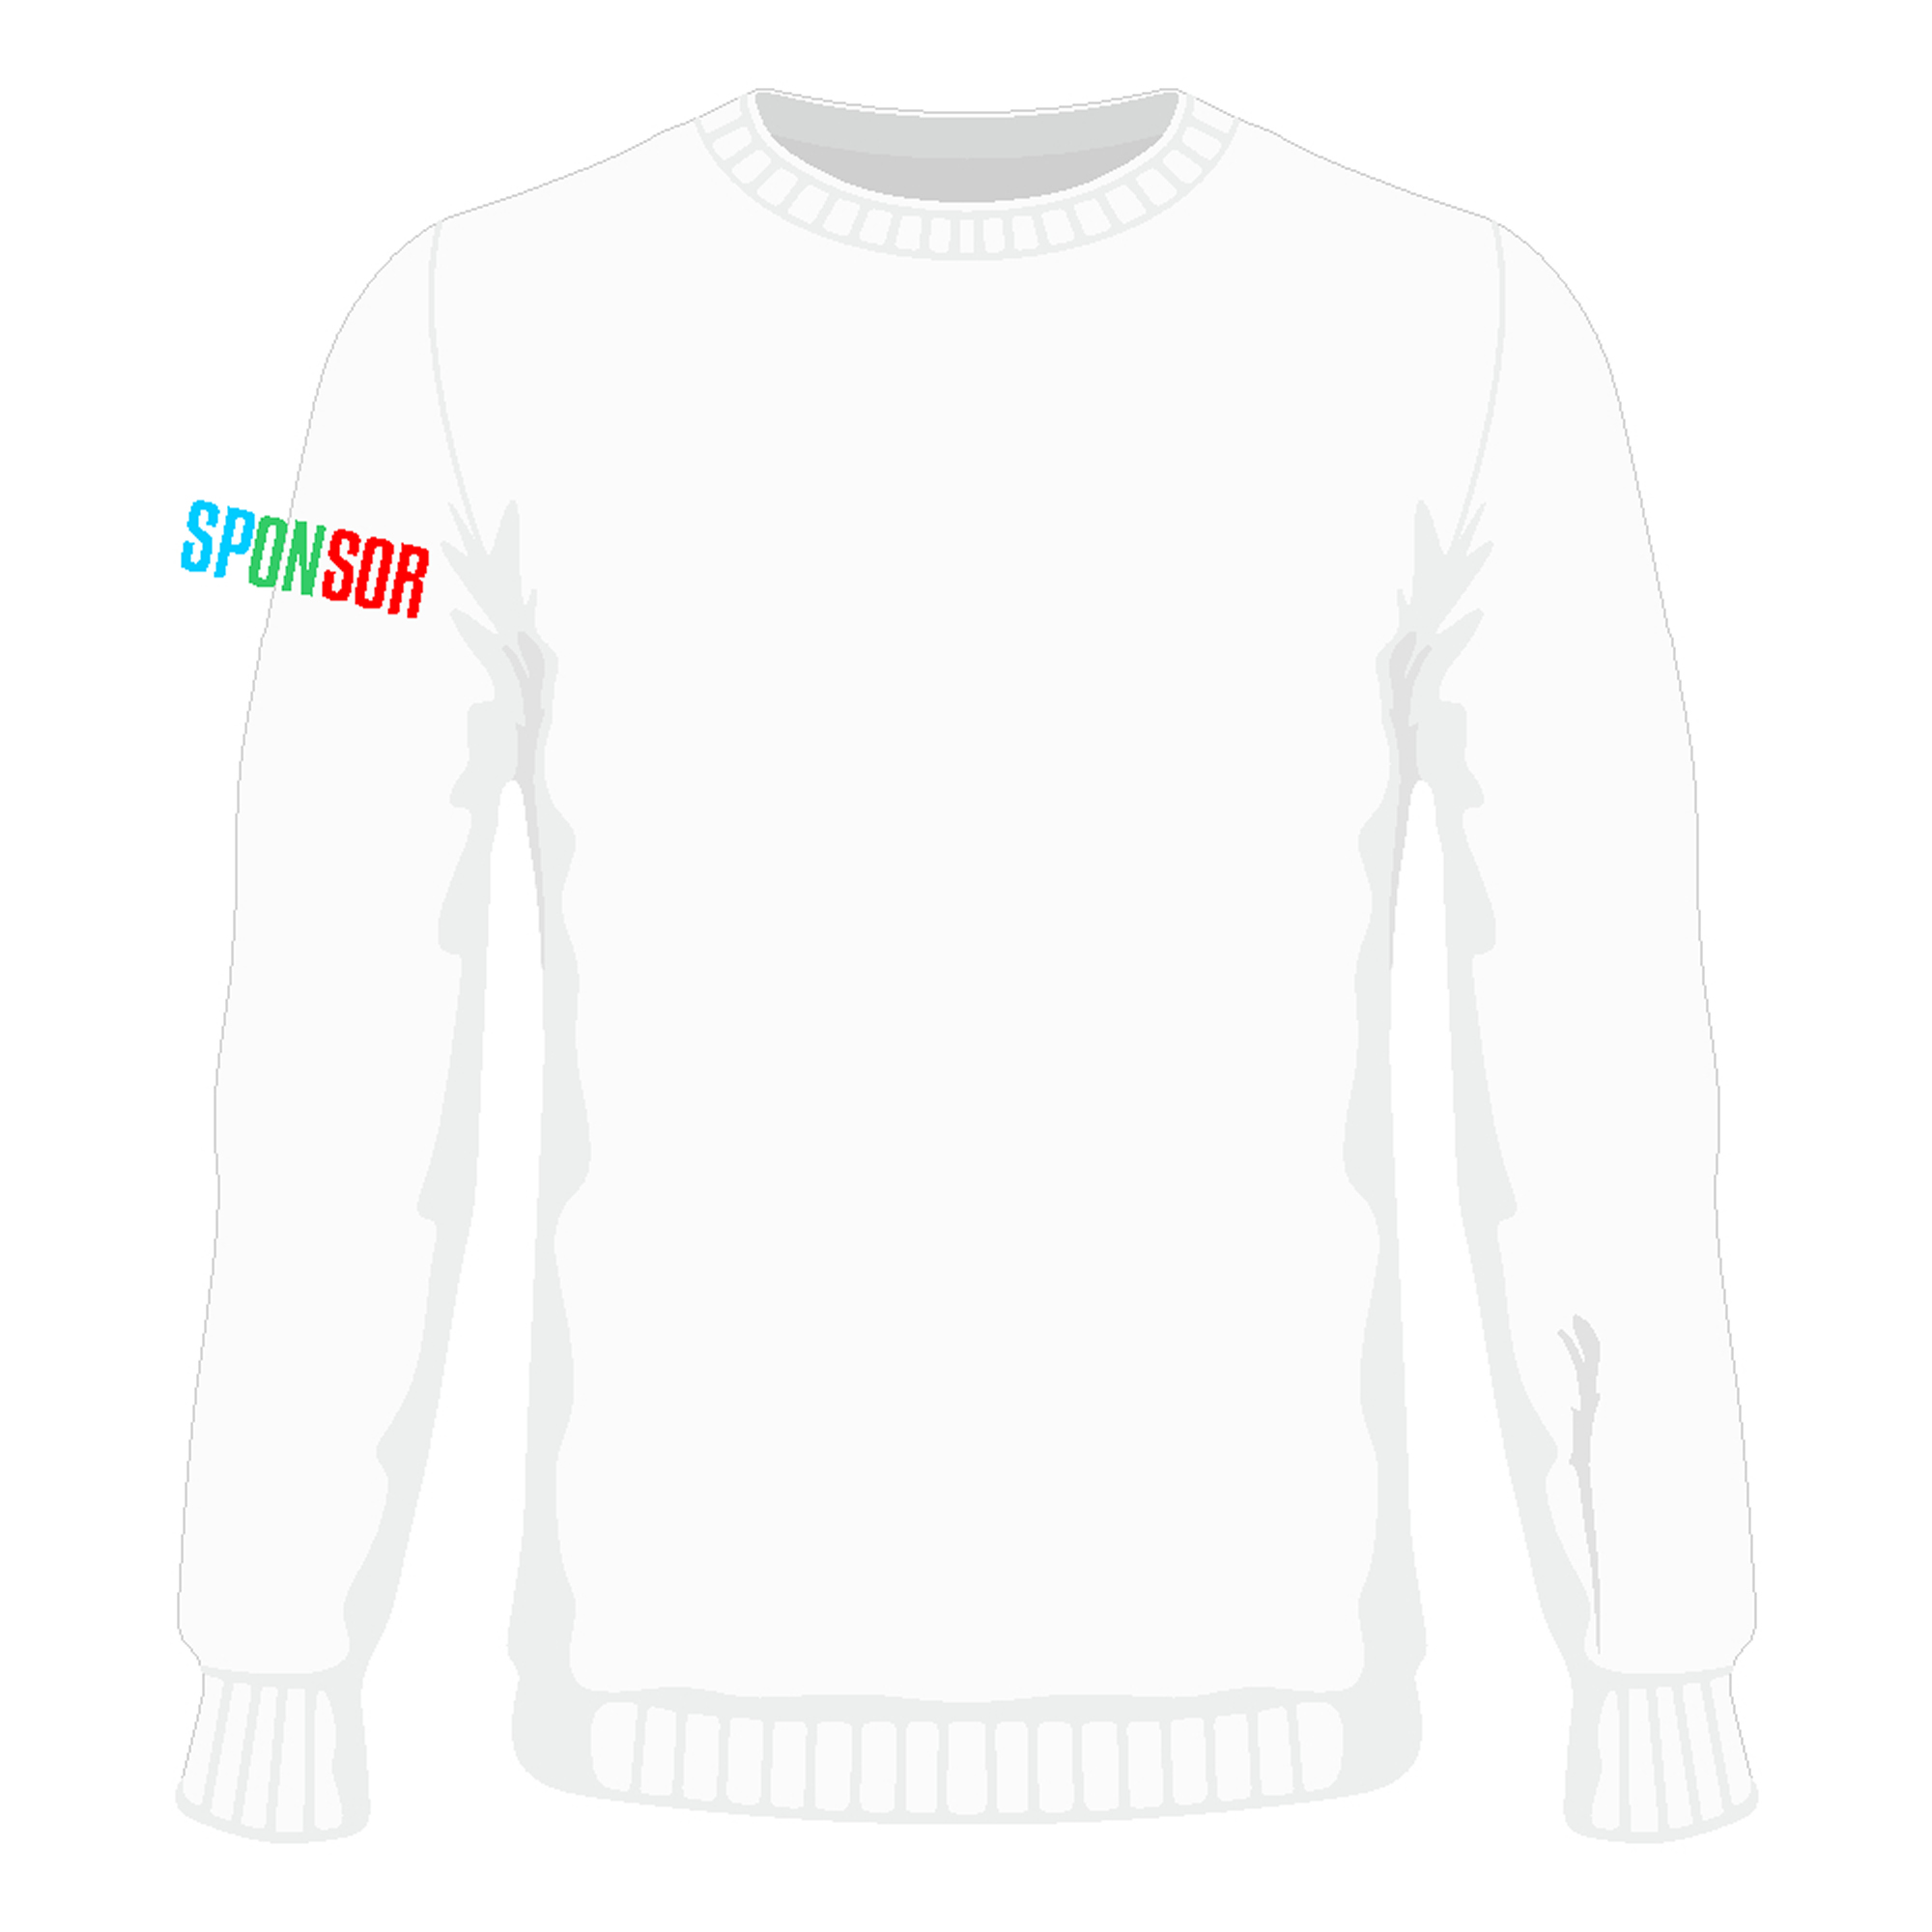 Sweatshirt Sponsor klein